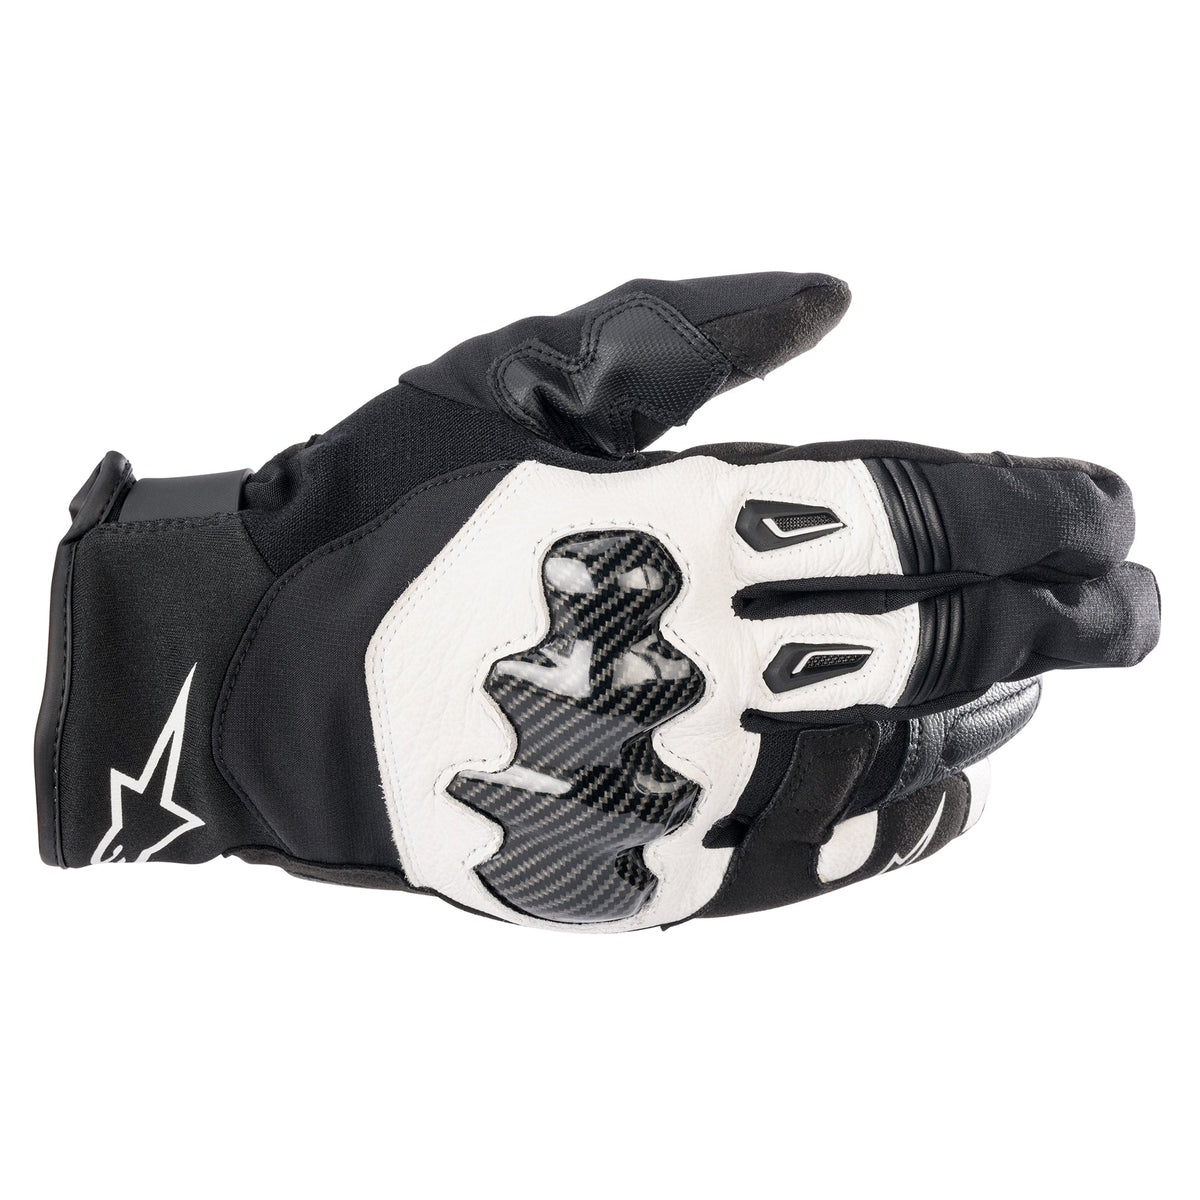 SMX-1 Drystar® Gloves